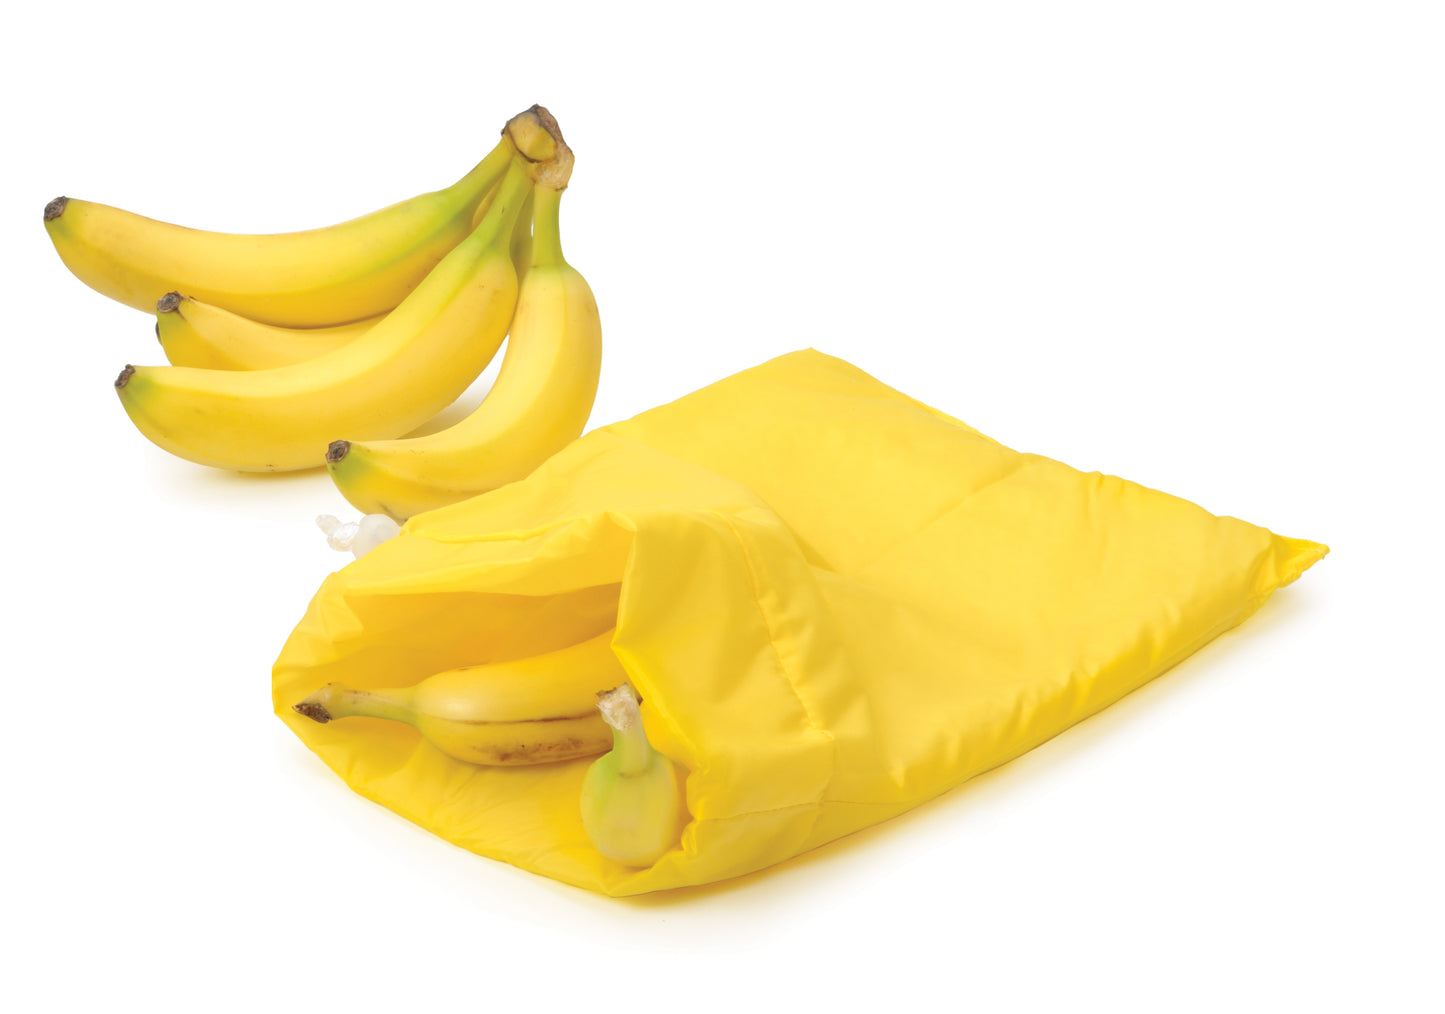 yellow banana bag with bananas inside and a bunch of bananas next to it.